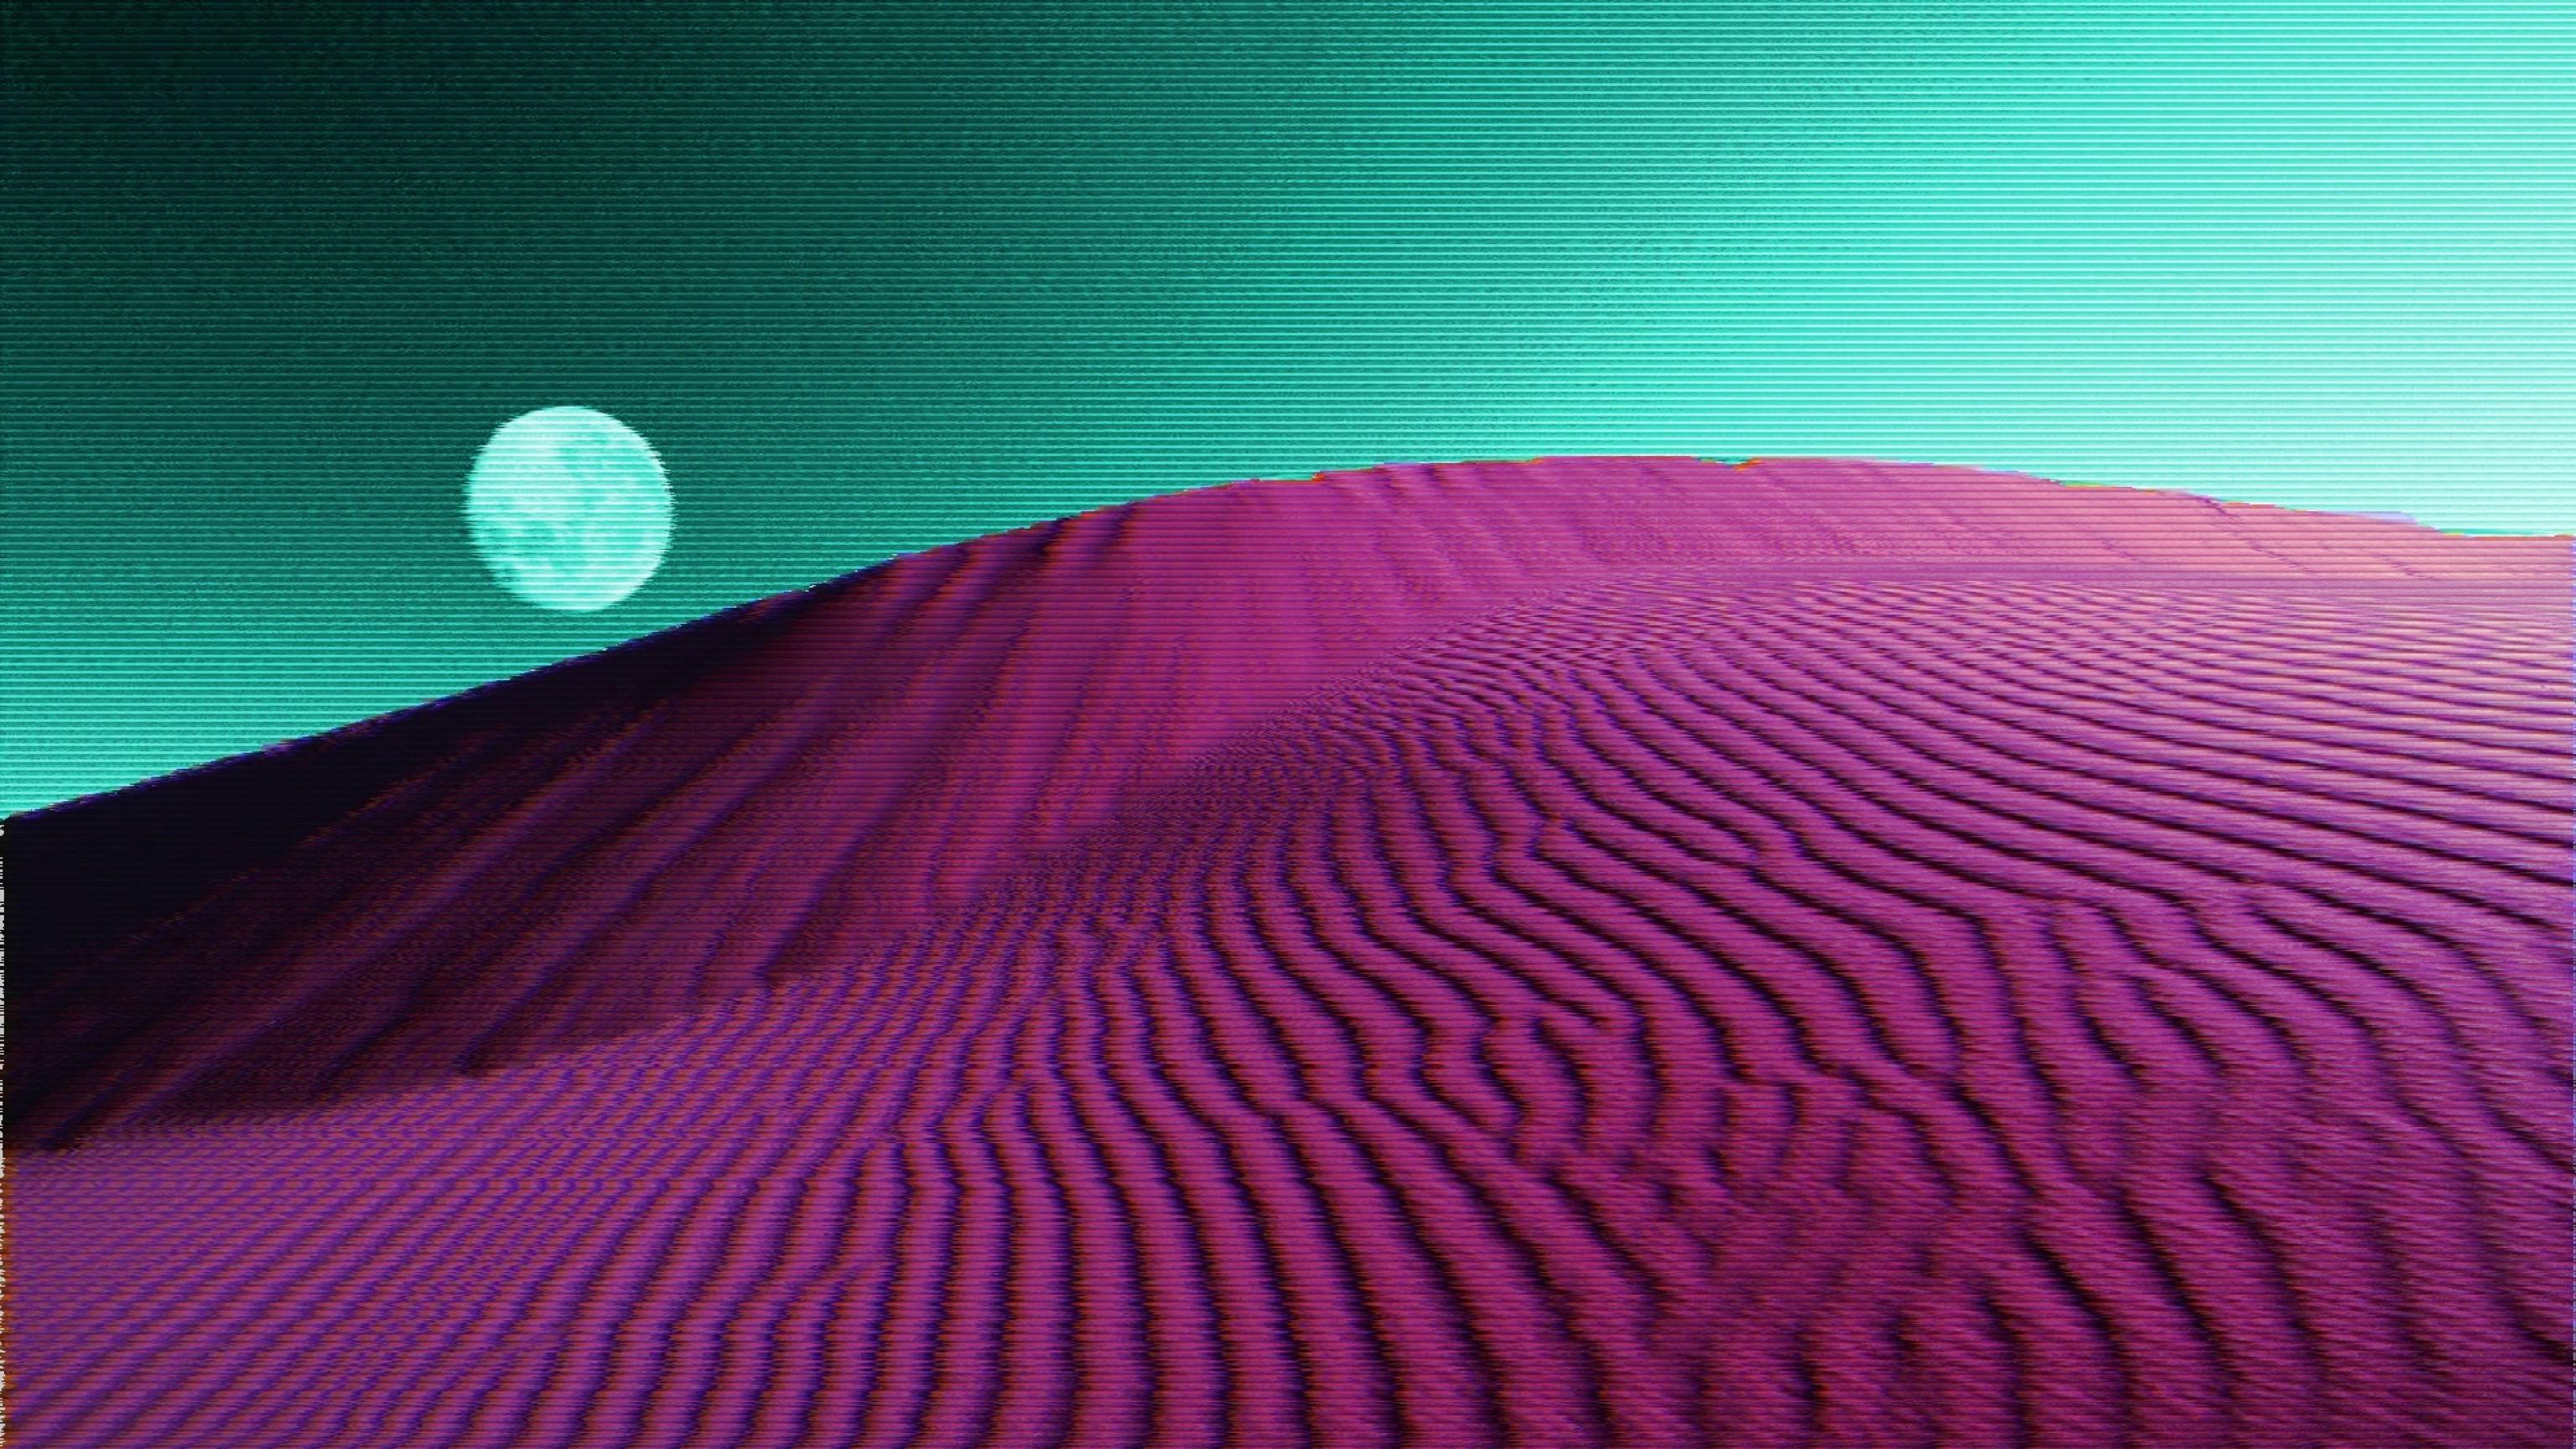 Vaporwave Desert HD Glitch Art 5K Wallpaper, HD Artist 4K Wallpaper, Image, Photo and Background